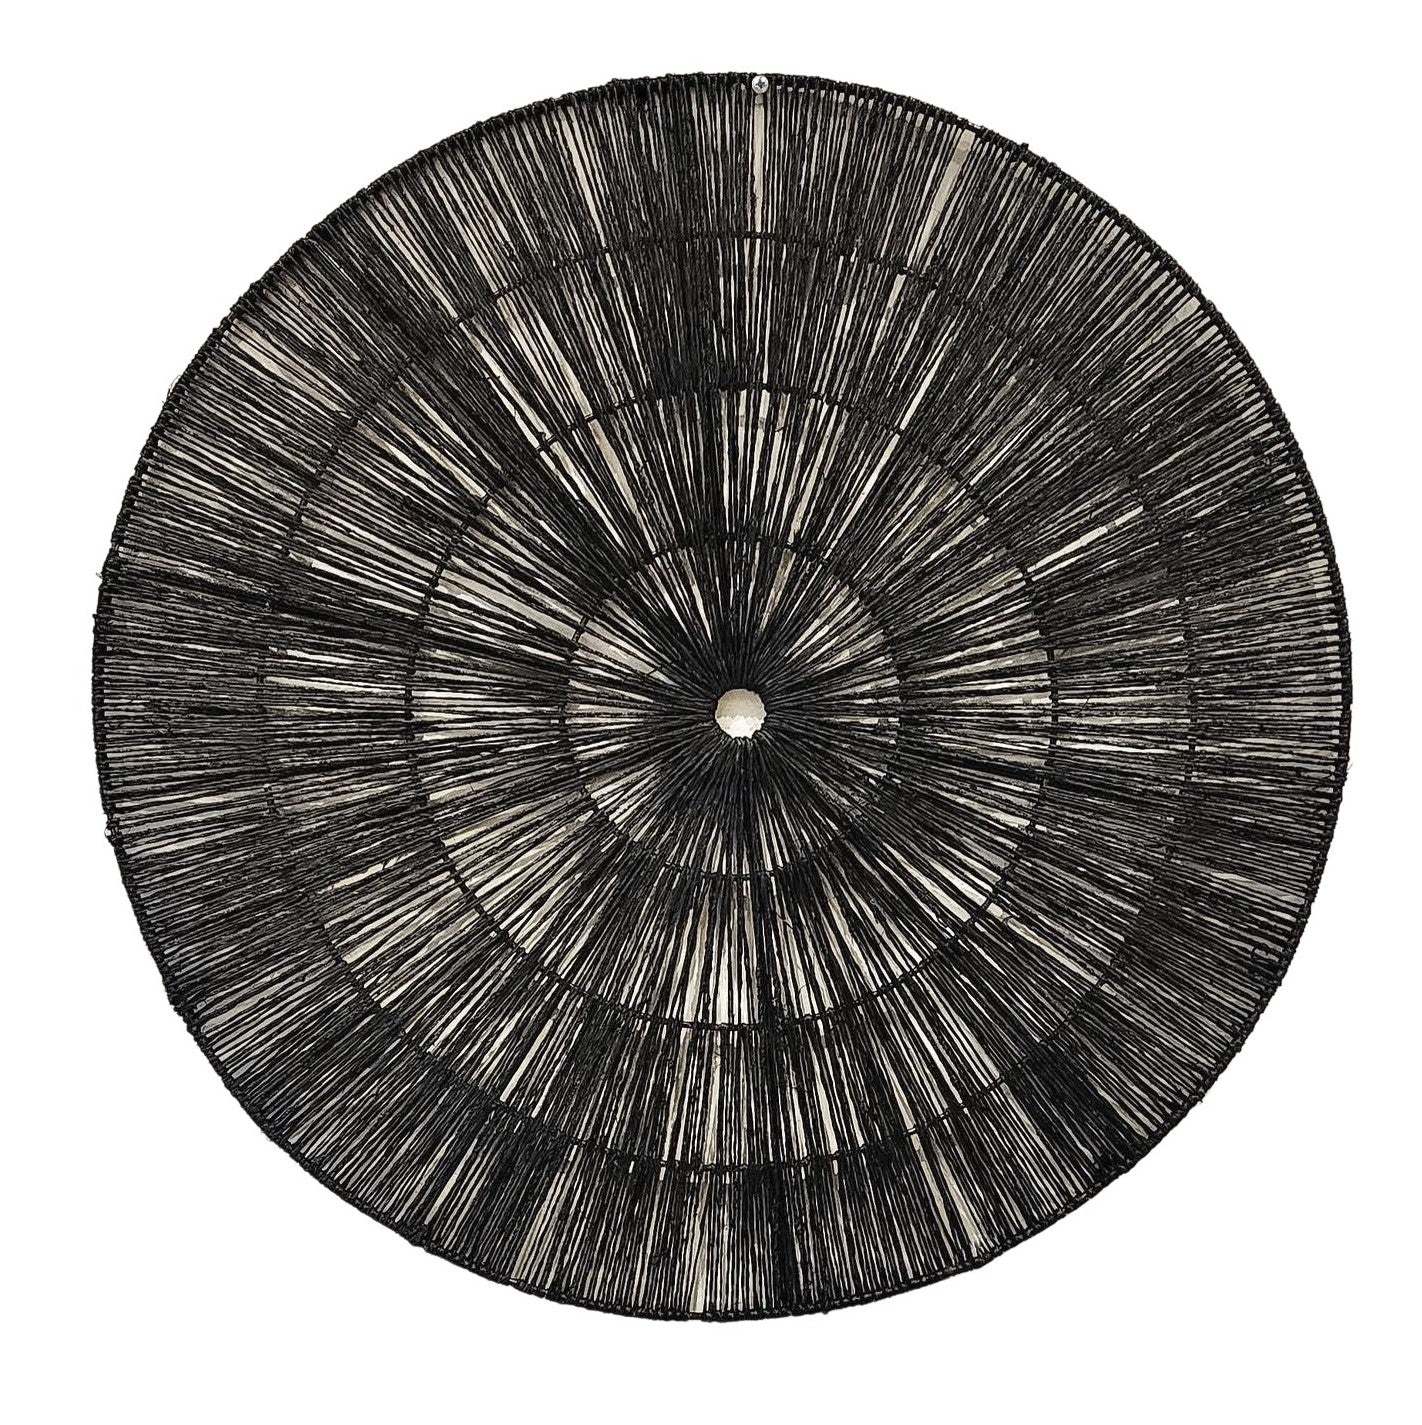 Dark Woven Wall Basket - Large - $135.00